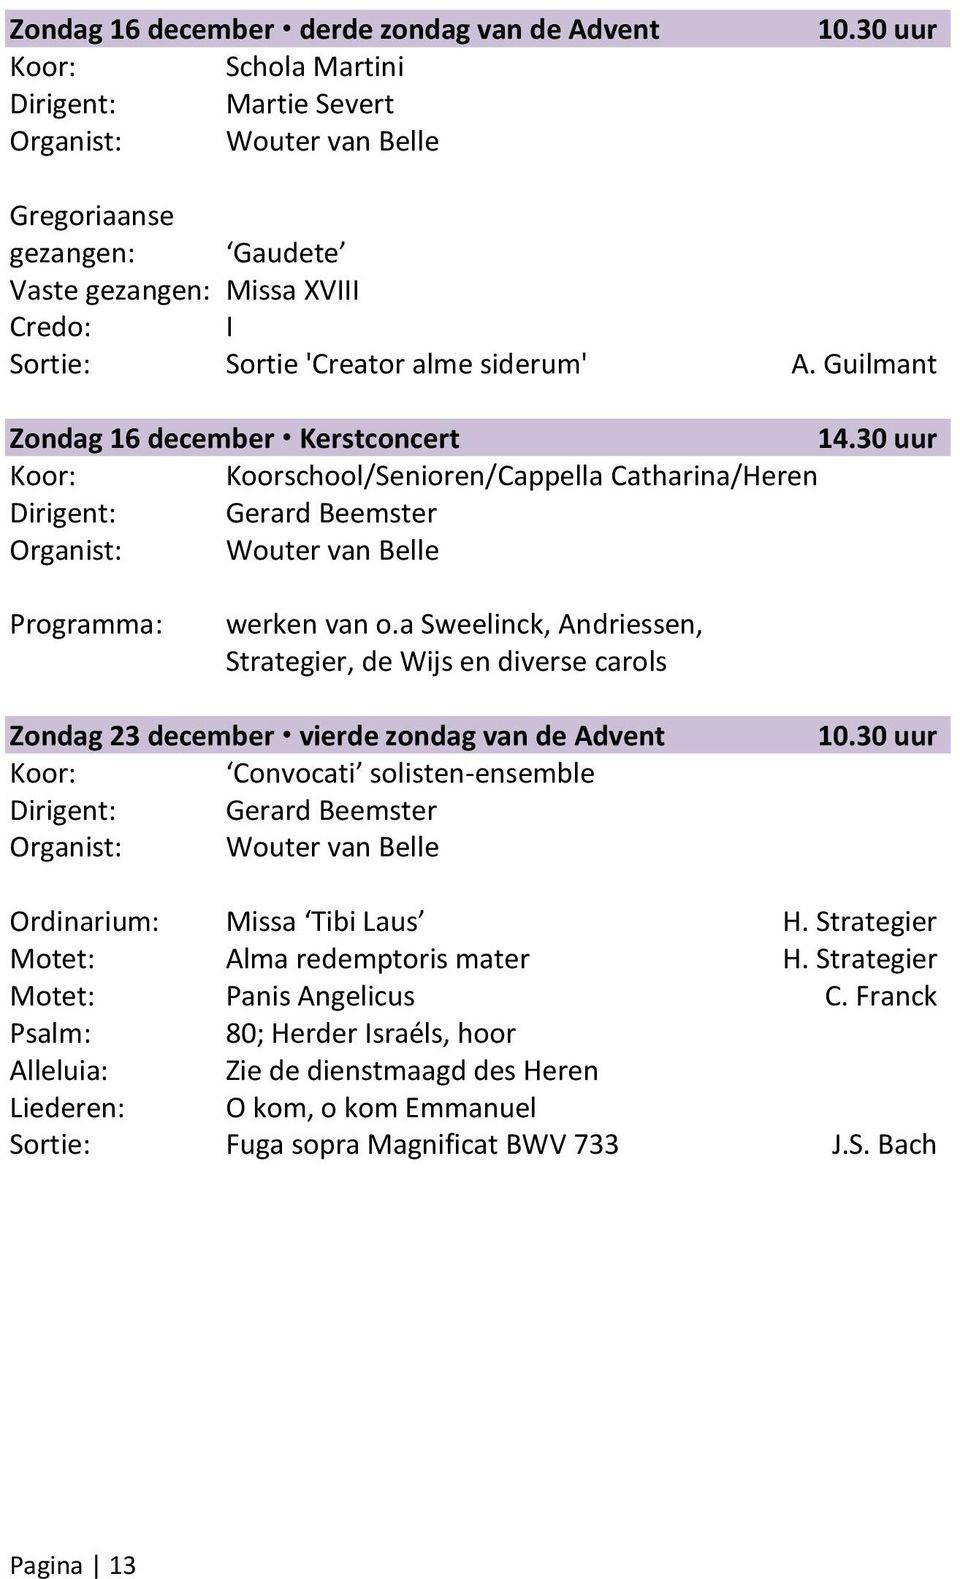 a Sweelinck, Andriessen, Strategier, de Wijs en diverse carols Zondag 23 december vierde zondag van de Advent Convocati solisten-ensemble Ordinarium: Missa Tibi Laus H.